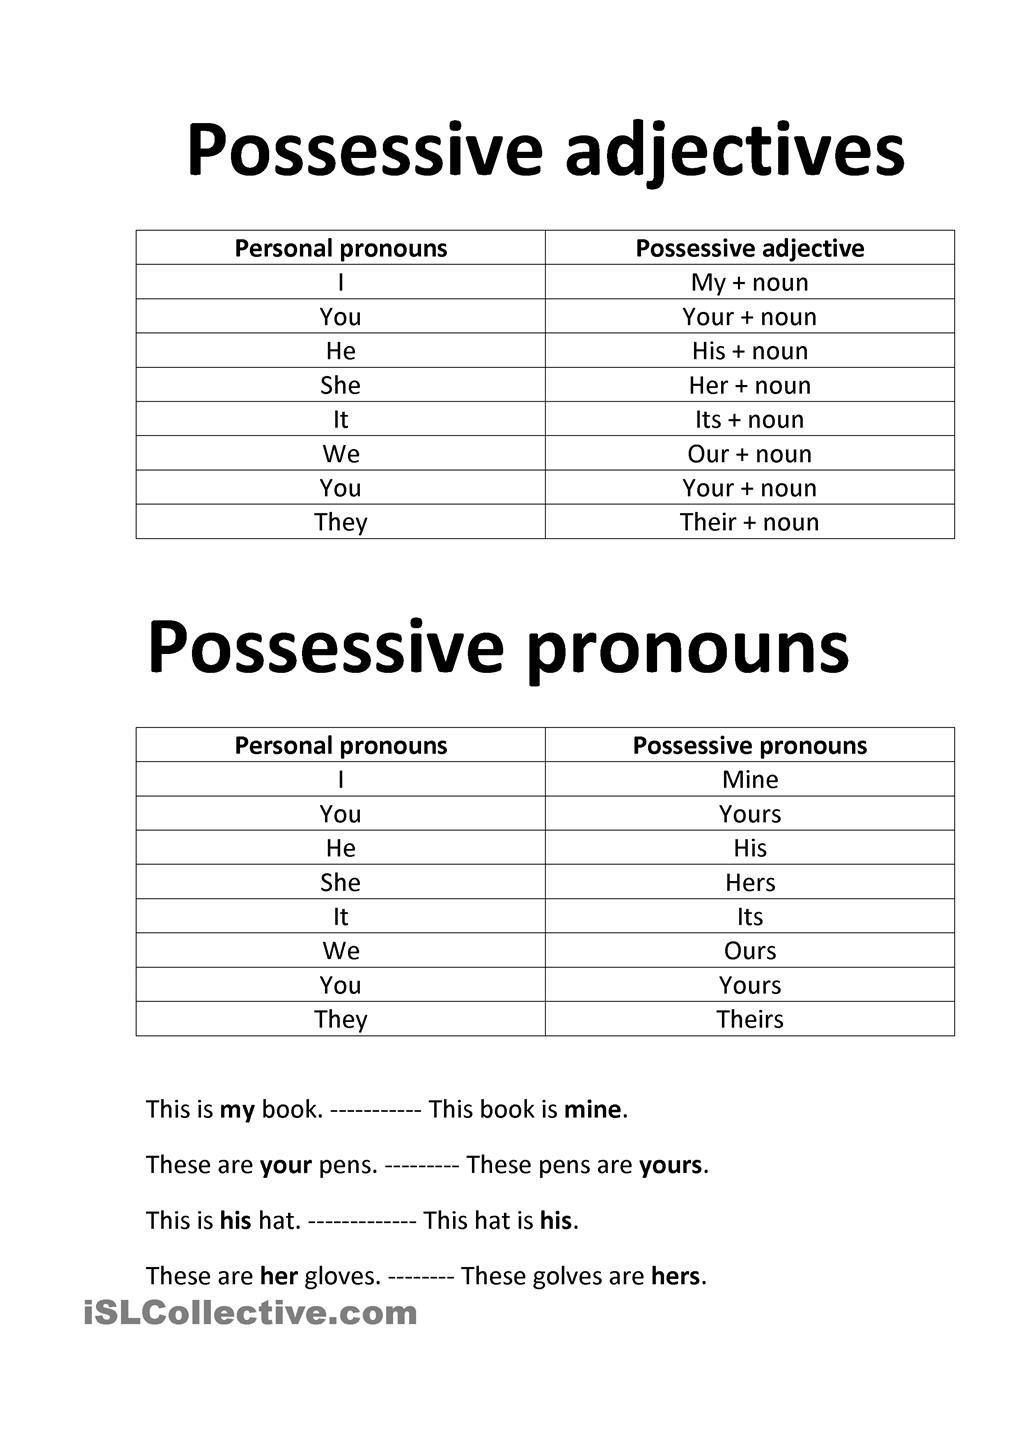 possessive-adjectives-long-form-spanish-worksheet-answers